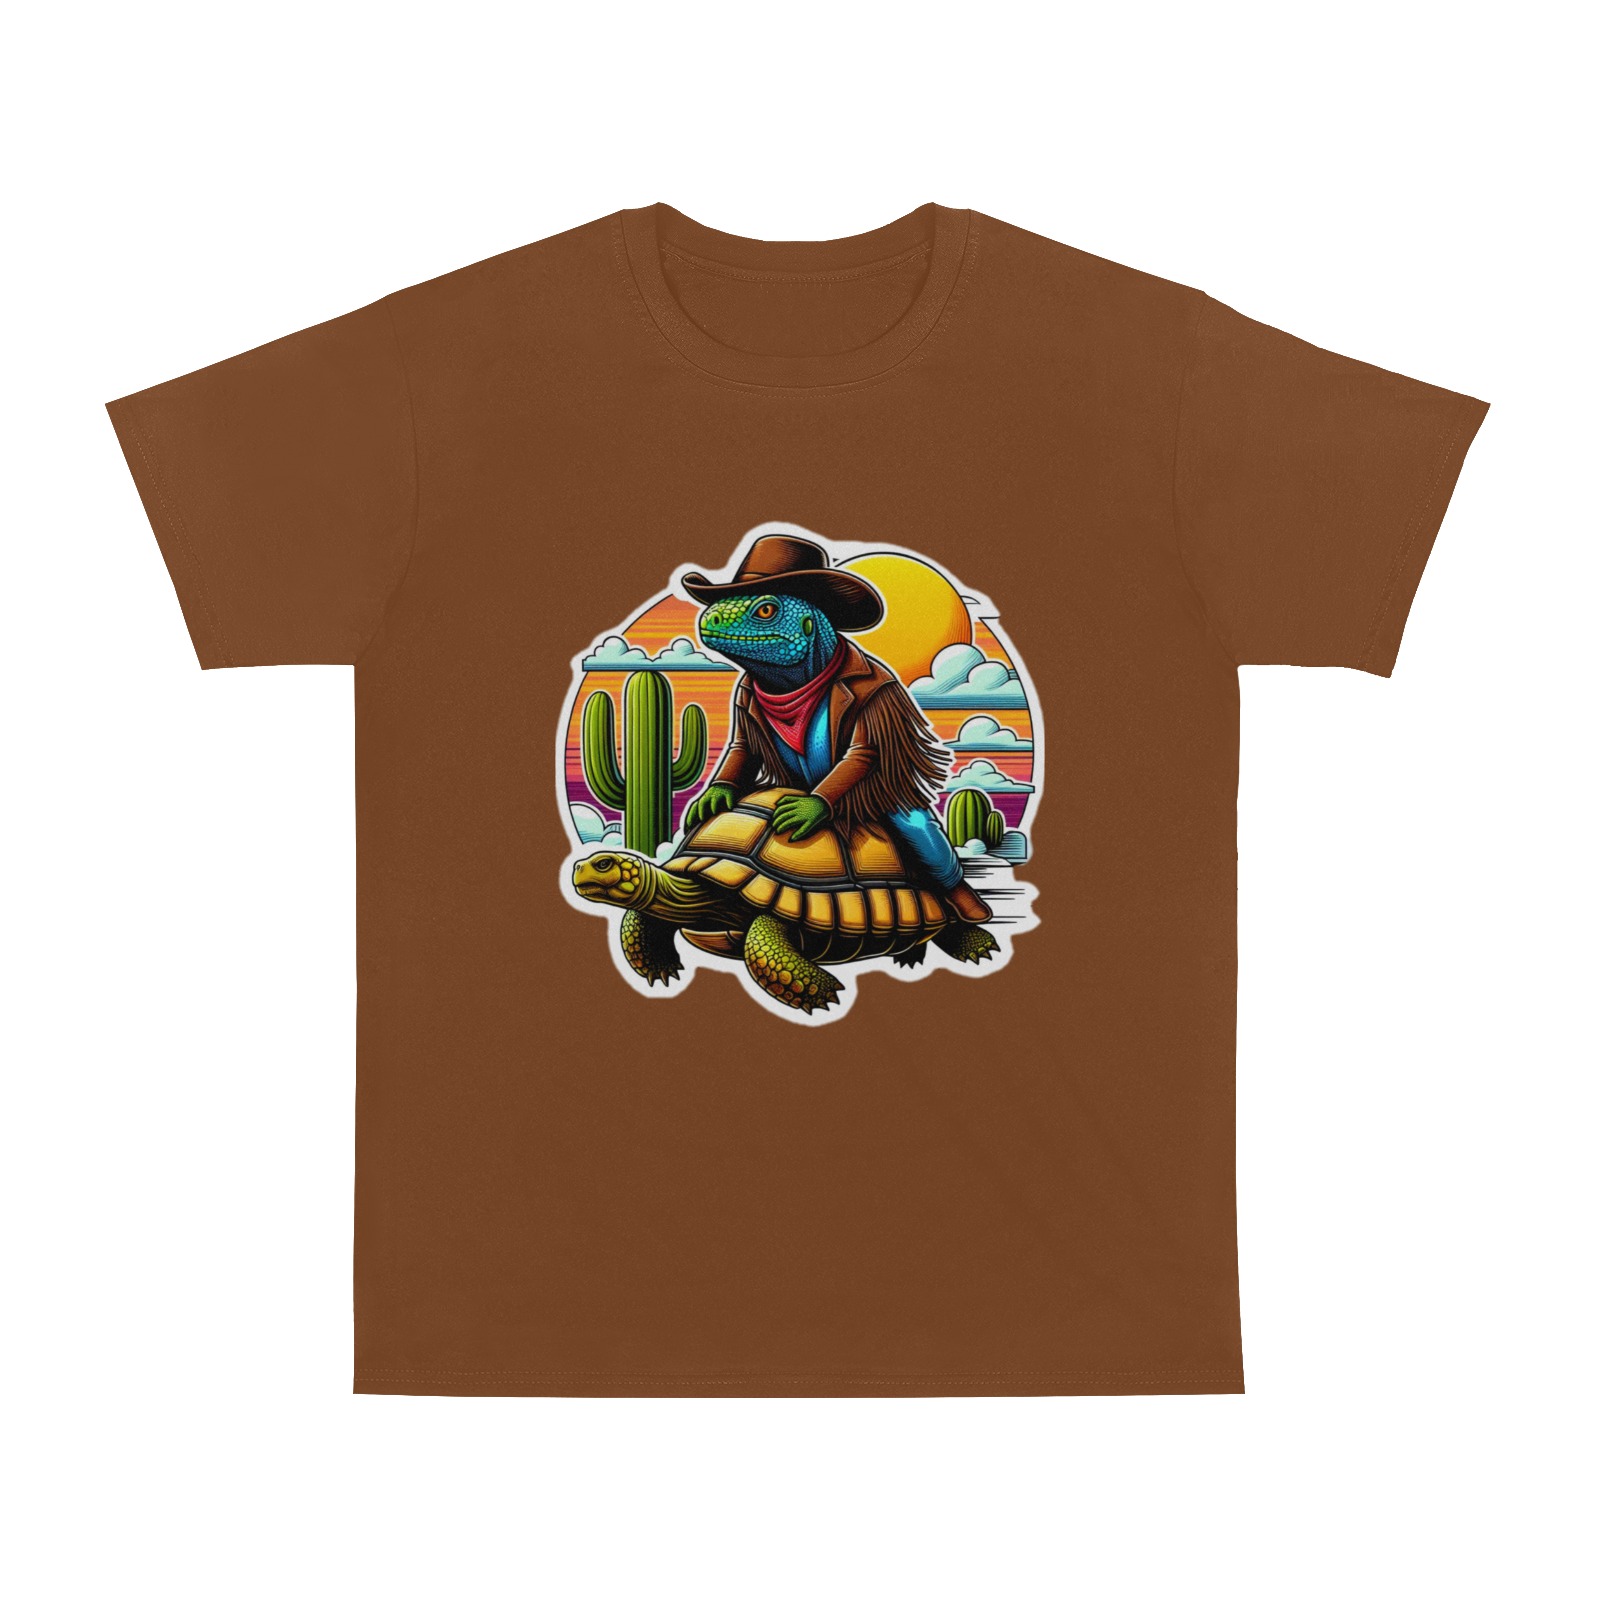 IGUANA RIDING DESERT TORTOISE Men's T-Shirt in USA Size (Two Sides Printing)